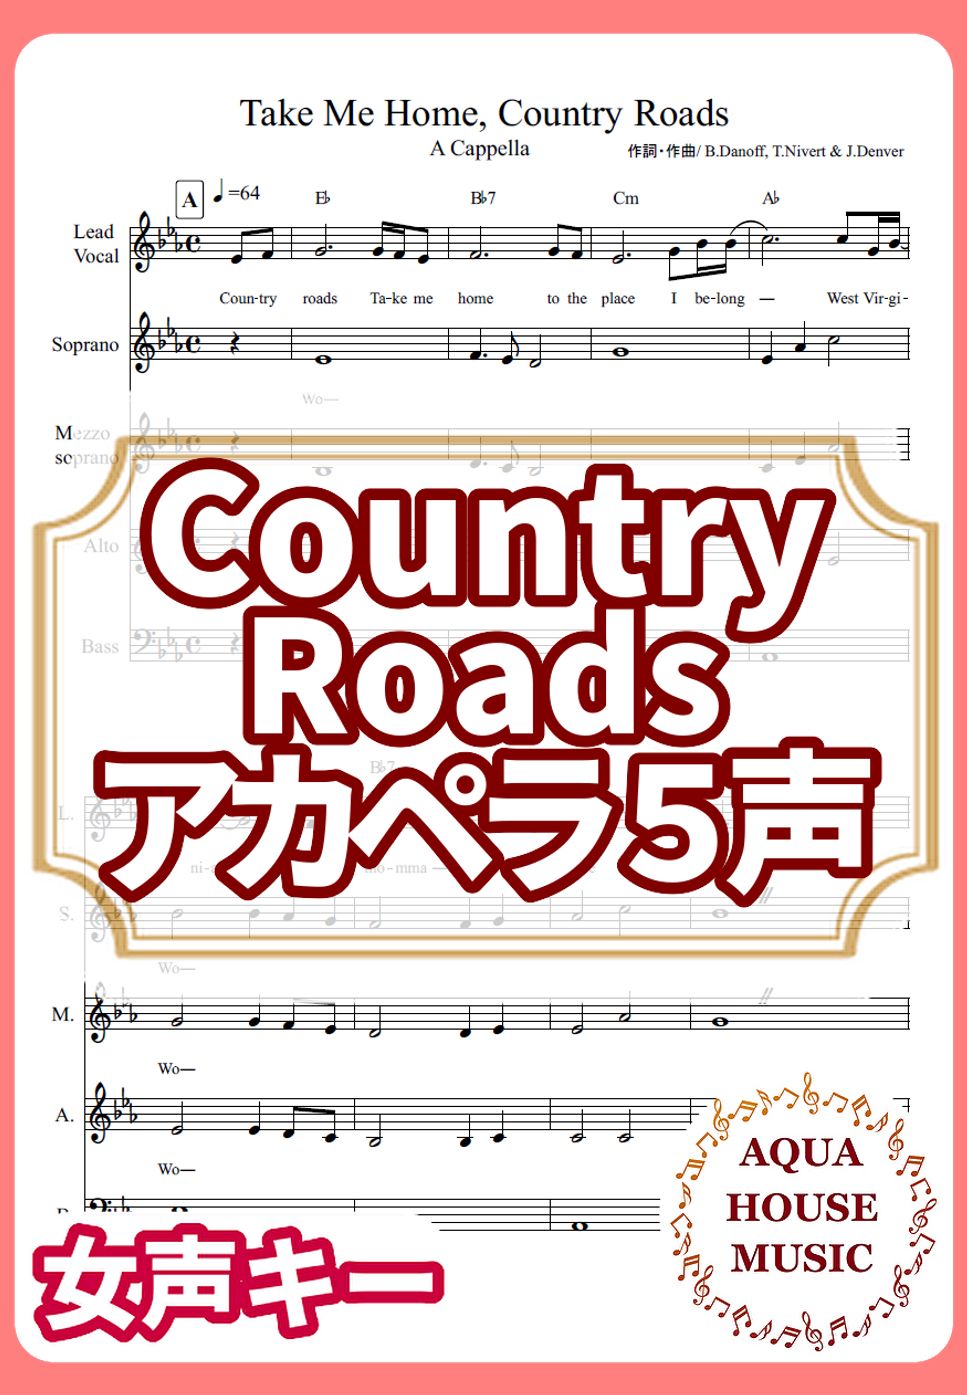 John Denver - Take Me Home, Country Roads (アカペラ楽譜♪5声ボイパなし) by 飯田 亜紗子